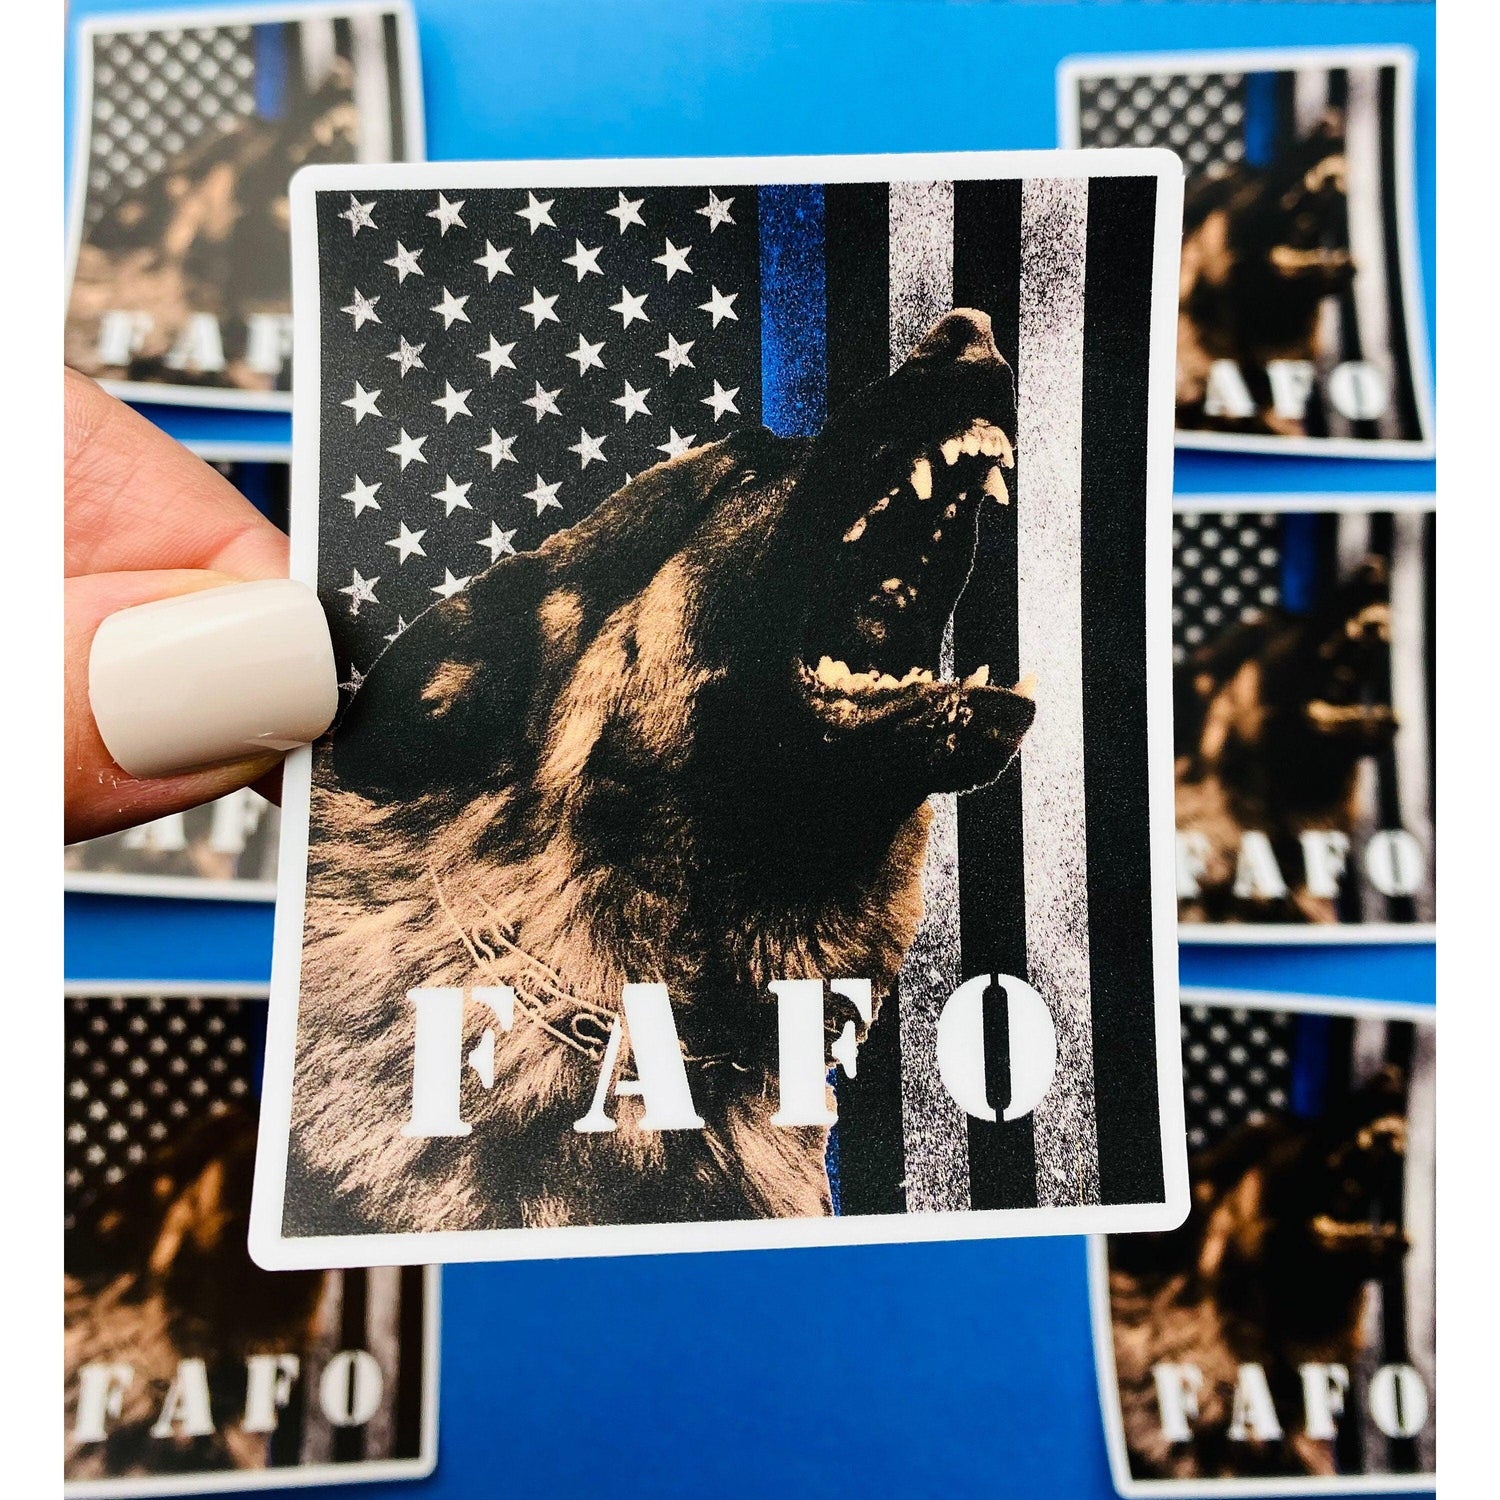 K9 FAFO Sticker, Thin Blue Line Sticker for Police K9 Handler, Military K9, Schutzhund, K9 Unit, Law Enforcement - Ottos Grotto :: Stickers For Your Stuff